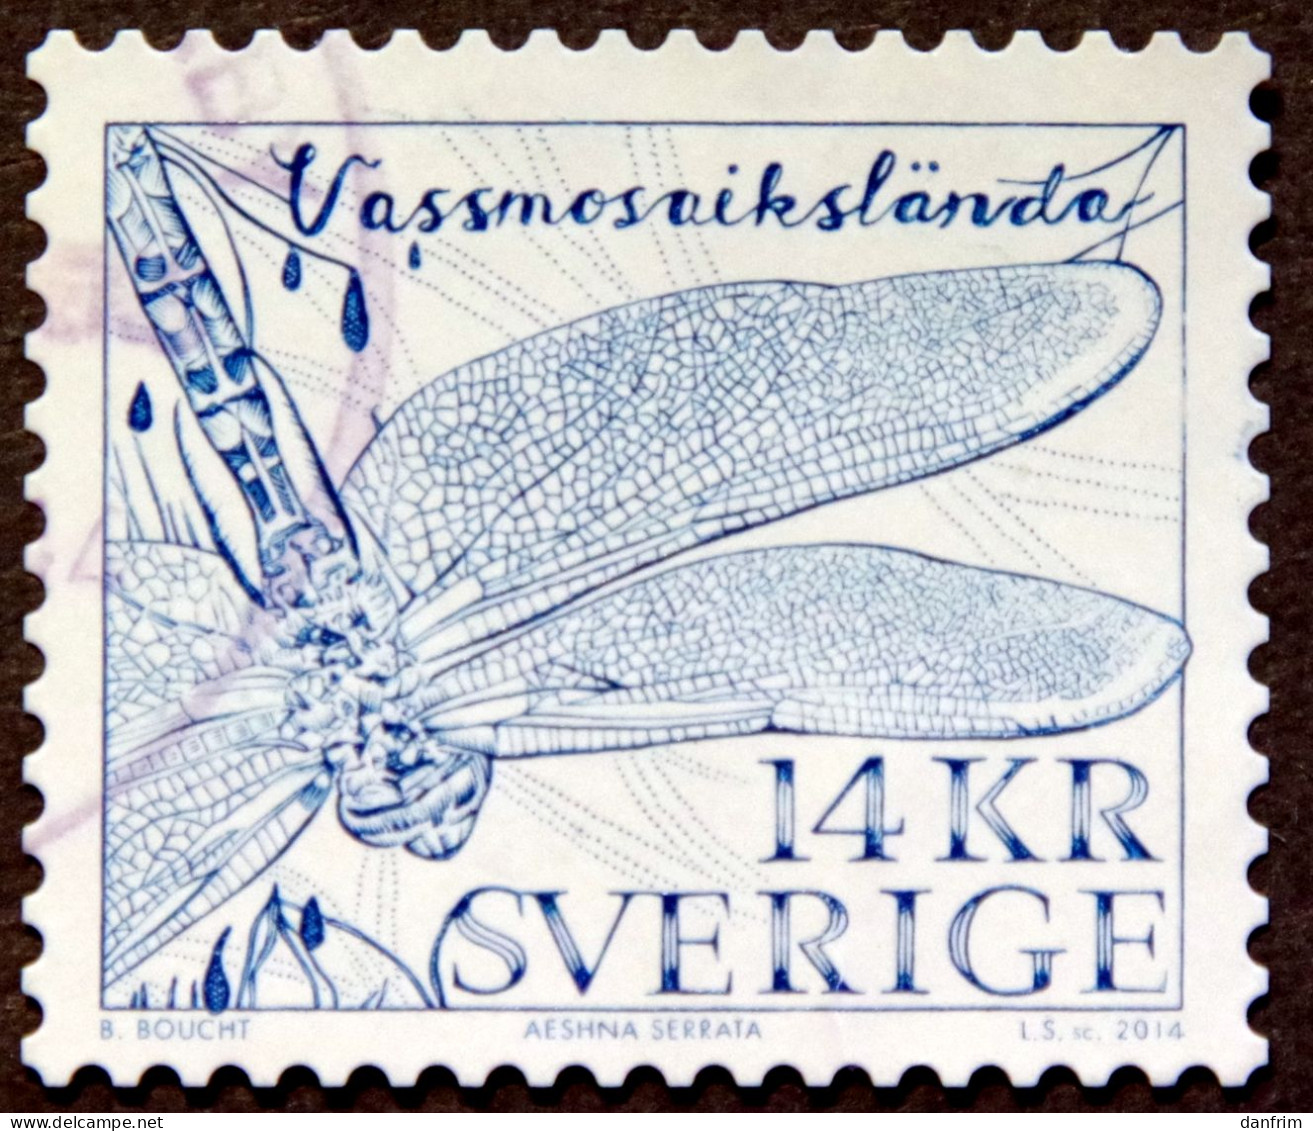 Sweden 2014  Minr.2989 (O)  ( Lot D 1935 ) - Used Stamps